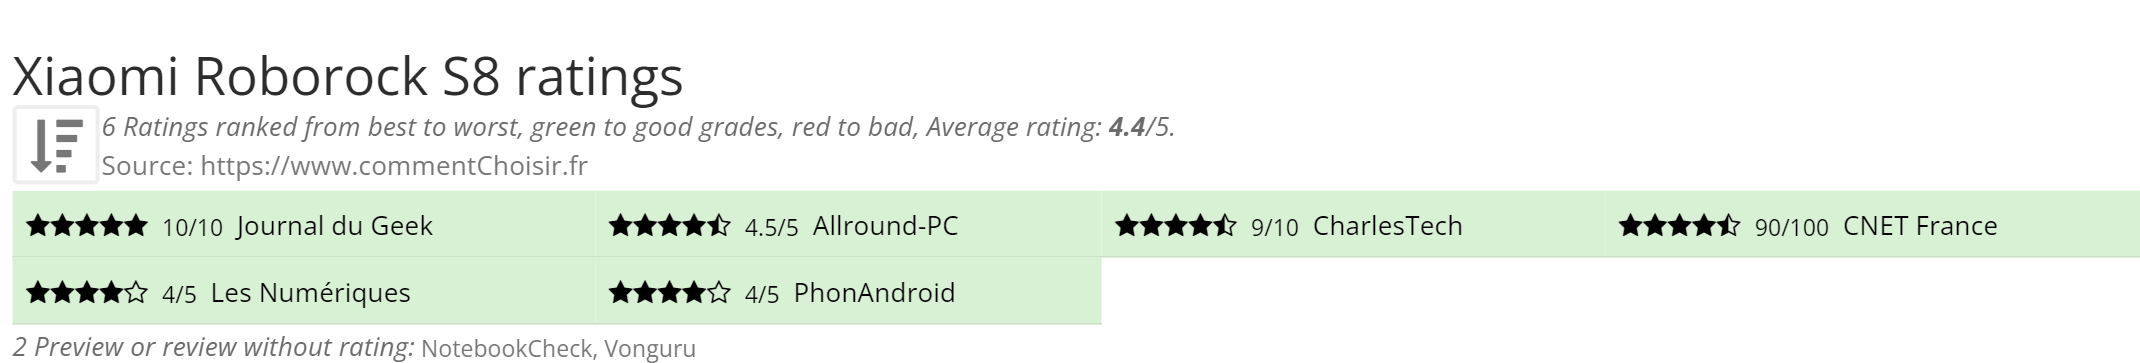 Ratings Xiaomi Roborock S8